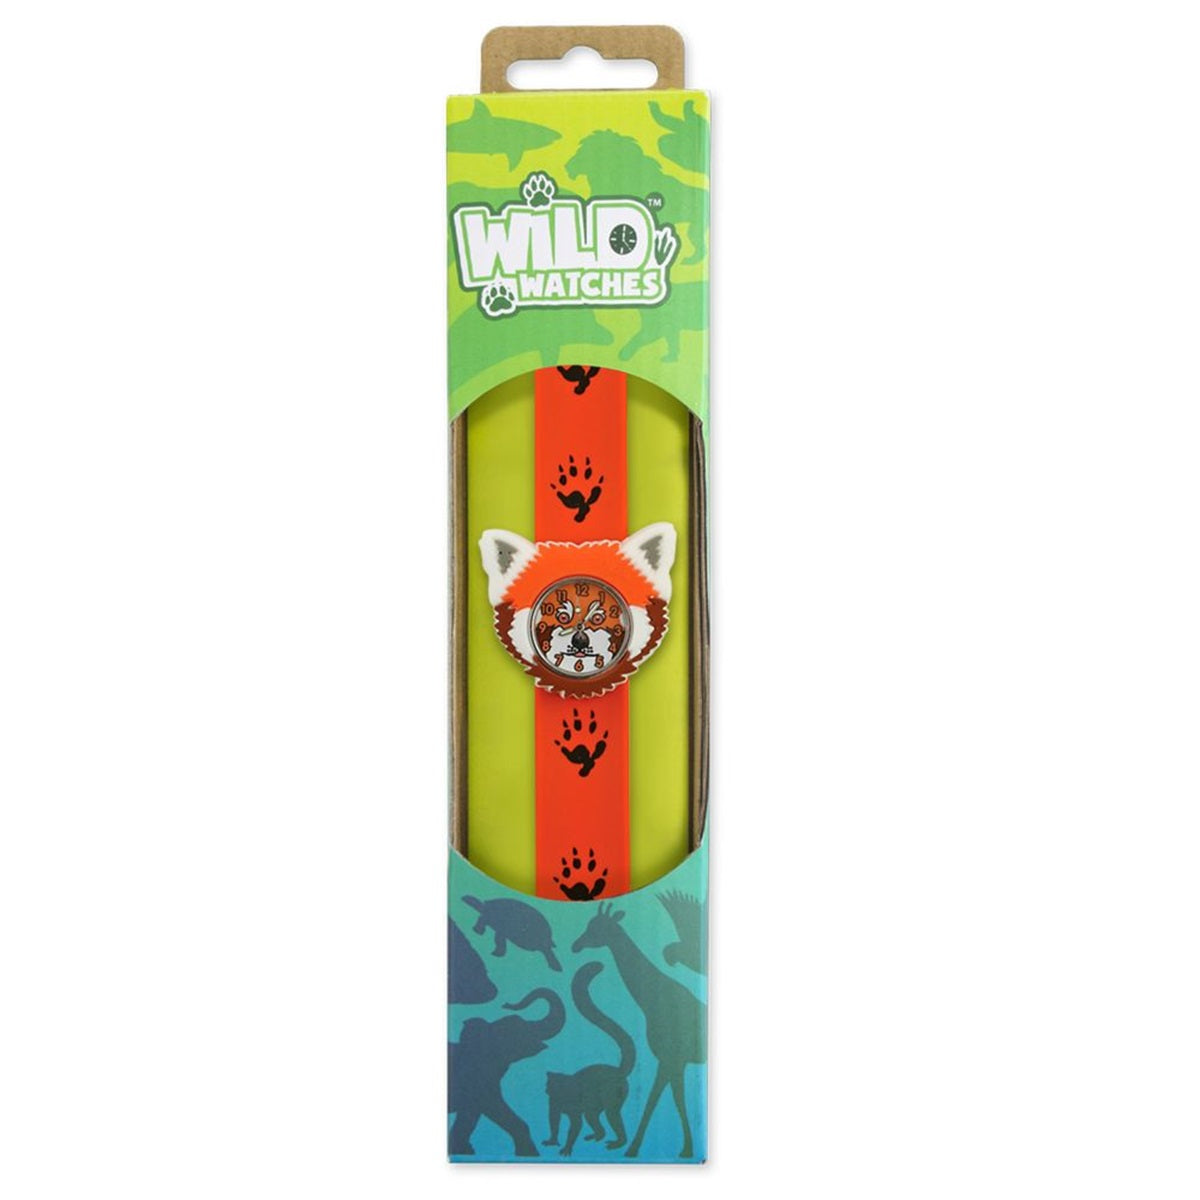 Keycraft Wild Watches Red Panda Snap Band Watch